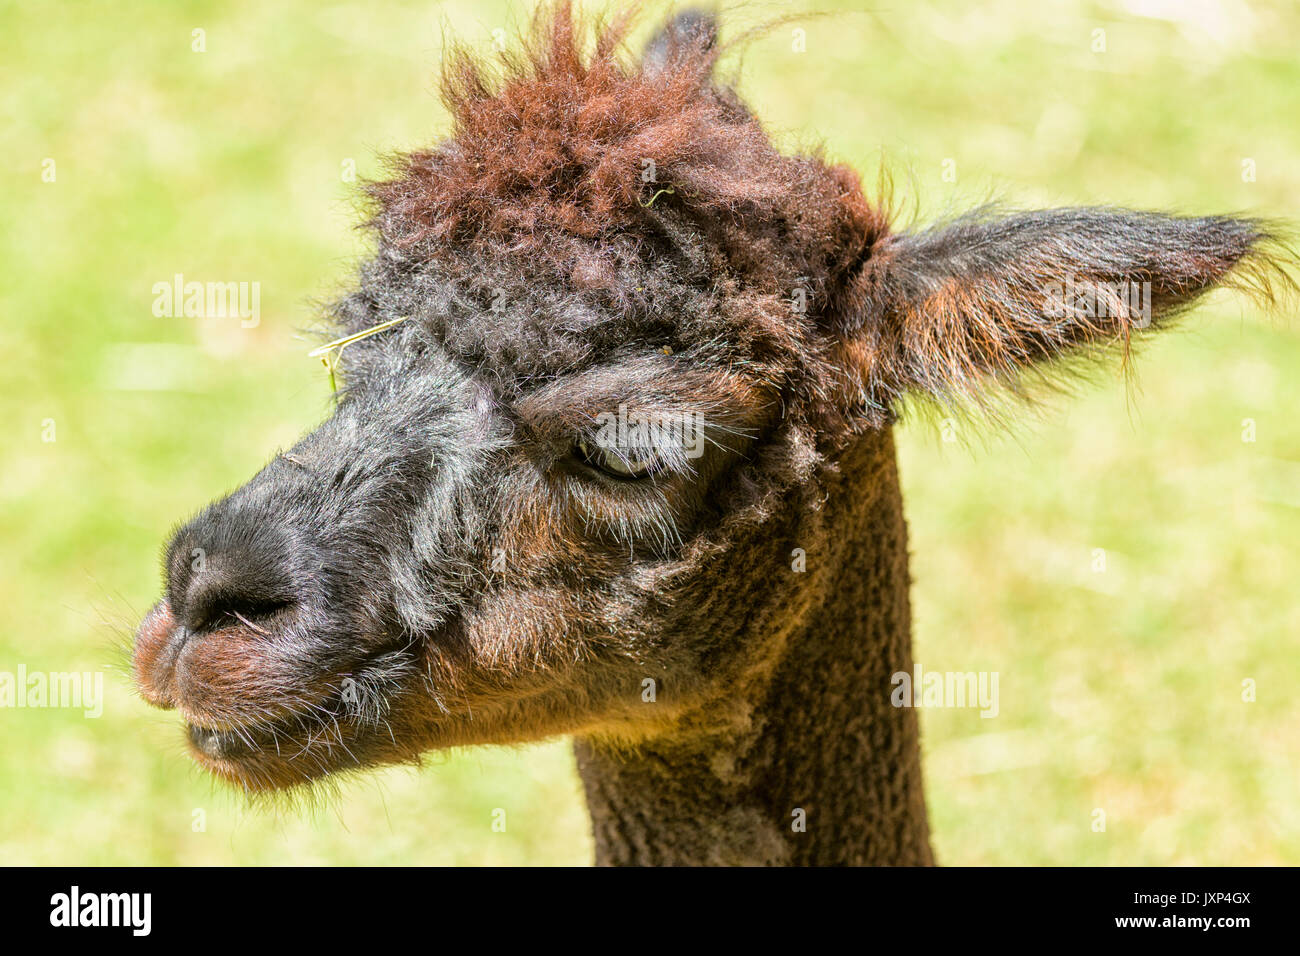 Close up headshot portrait of an alpaca (Vicugna pacos)  Model Release: No.  Property Release: No. Stock Photo